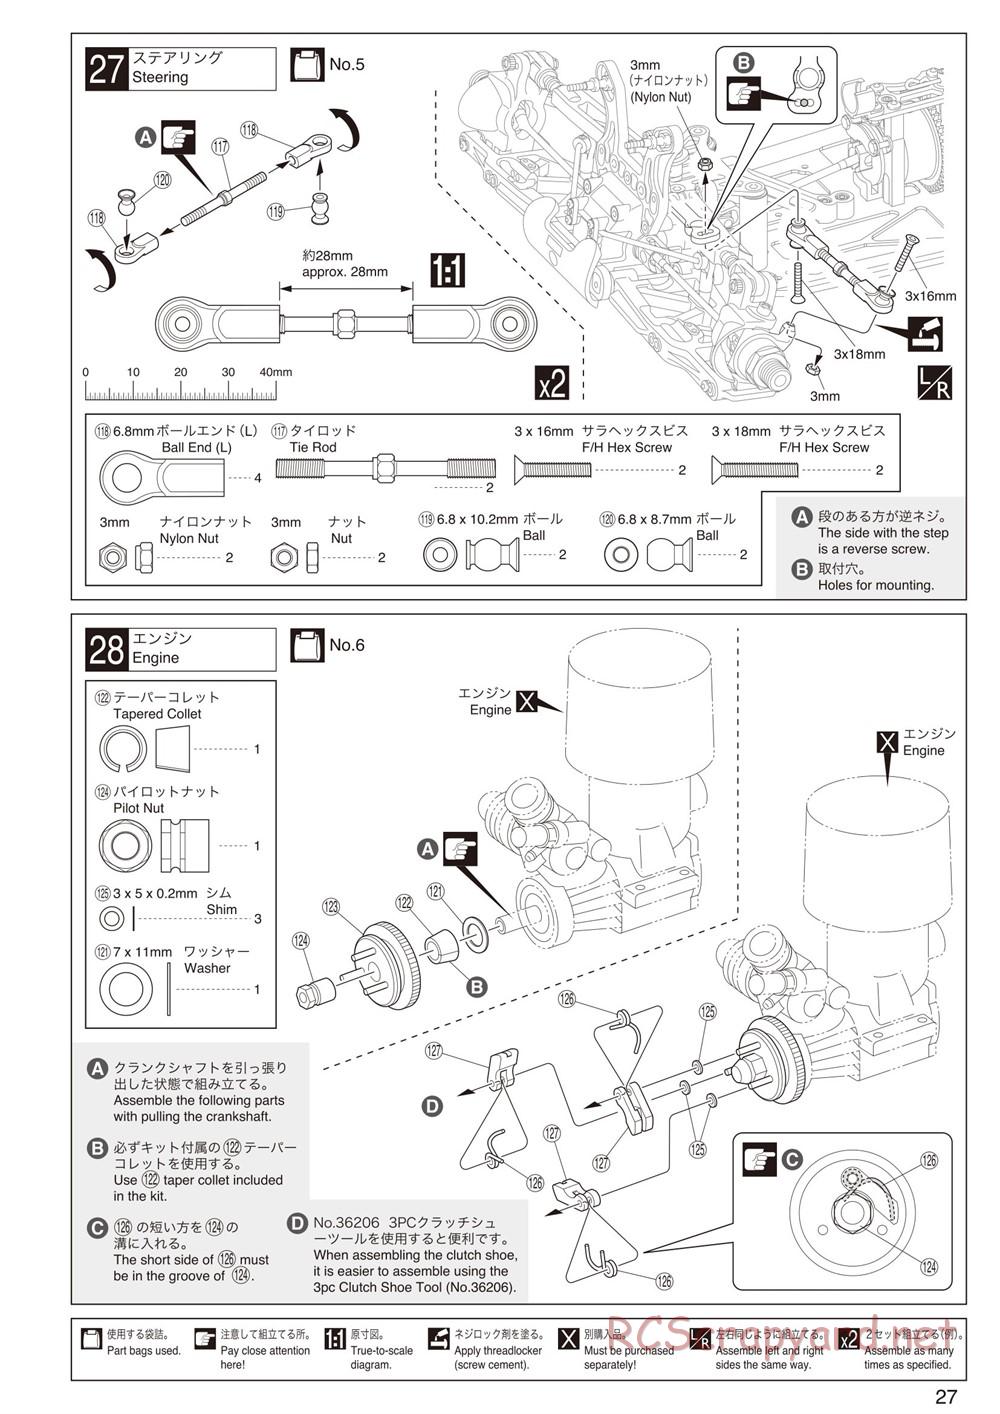 Kyosho - Inferno MP9 TKI2 - Manual - Page 27